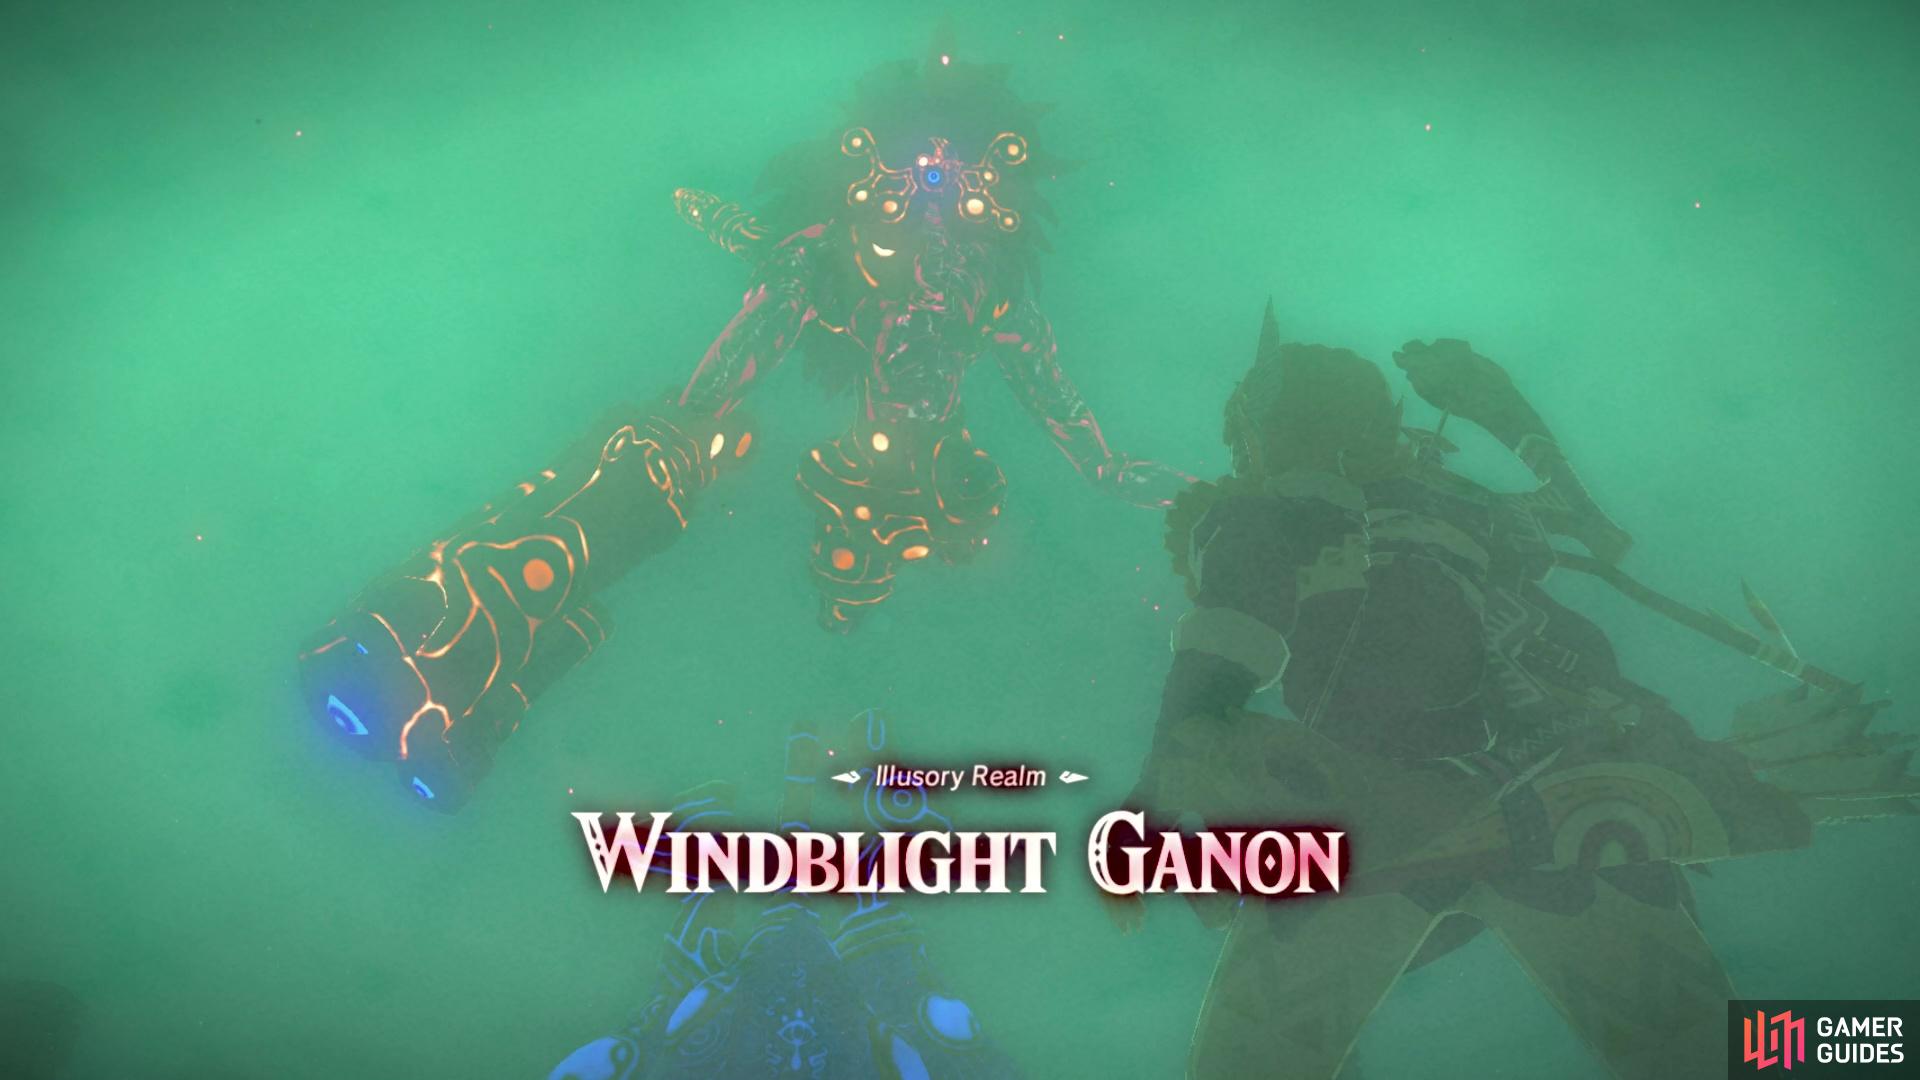 Welcome back, Windblight Ganon!